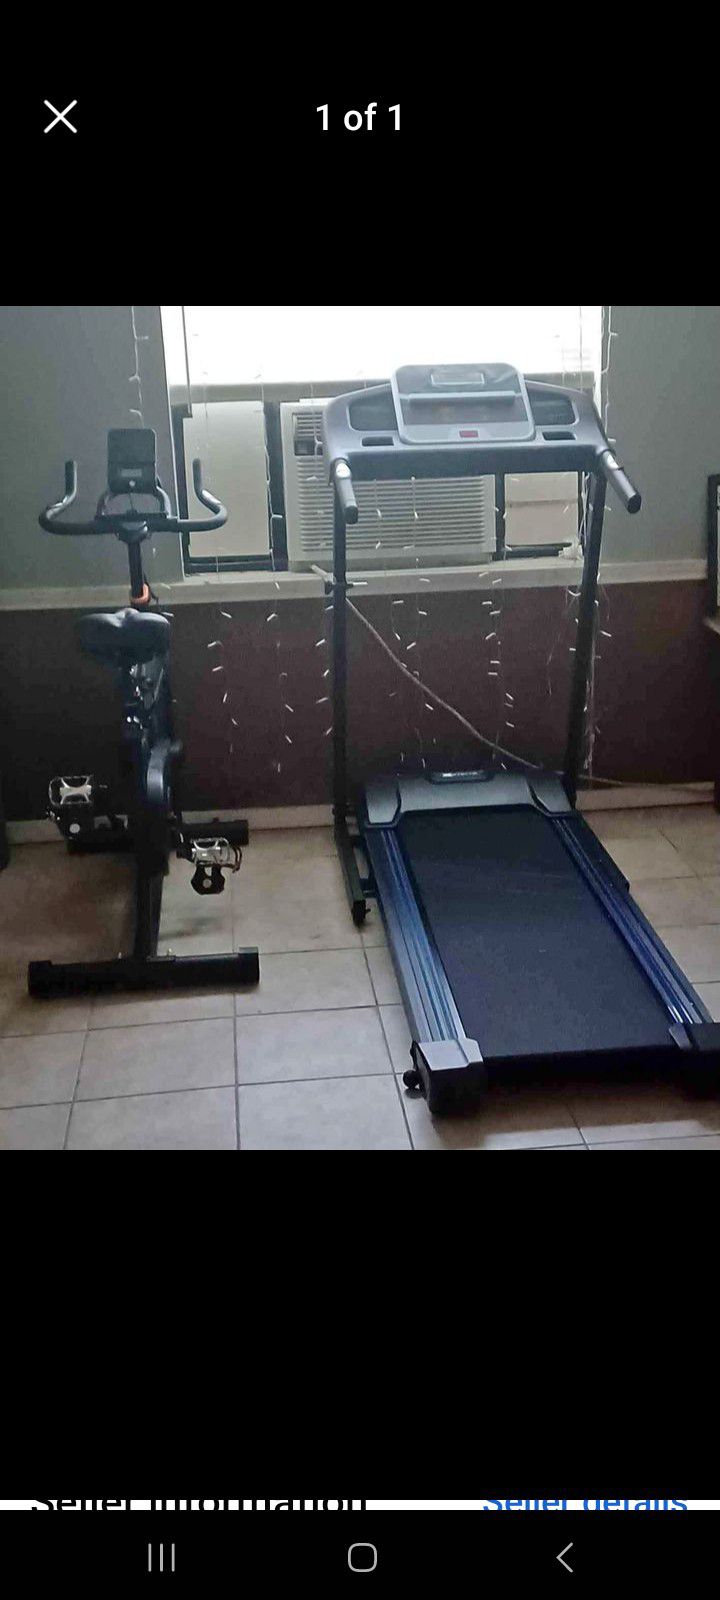 Xterra Folding Treadmill